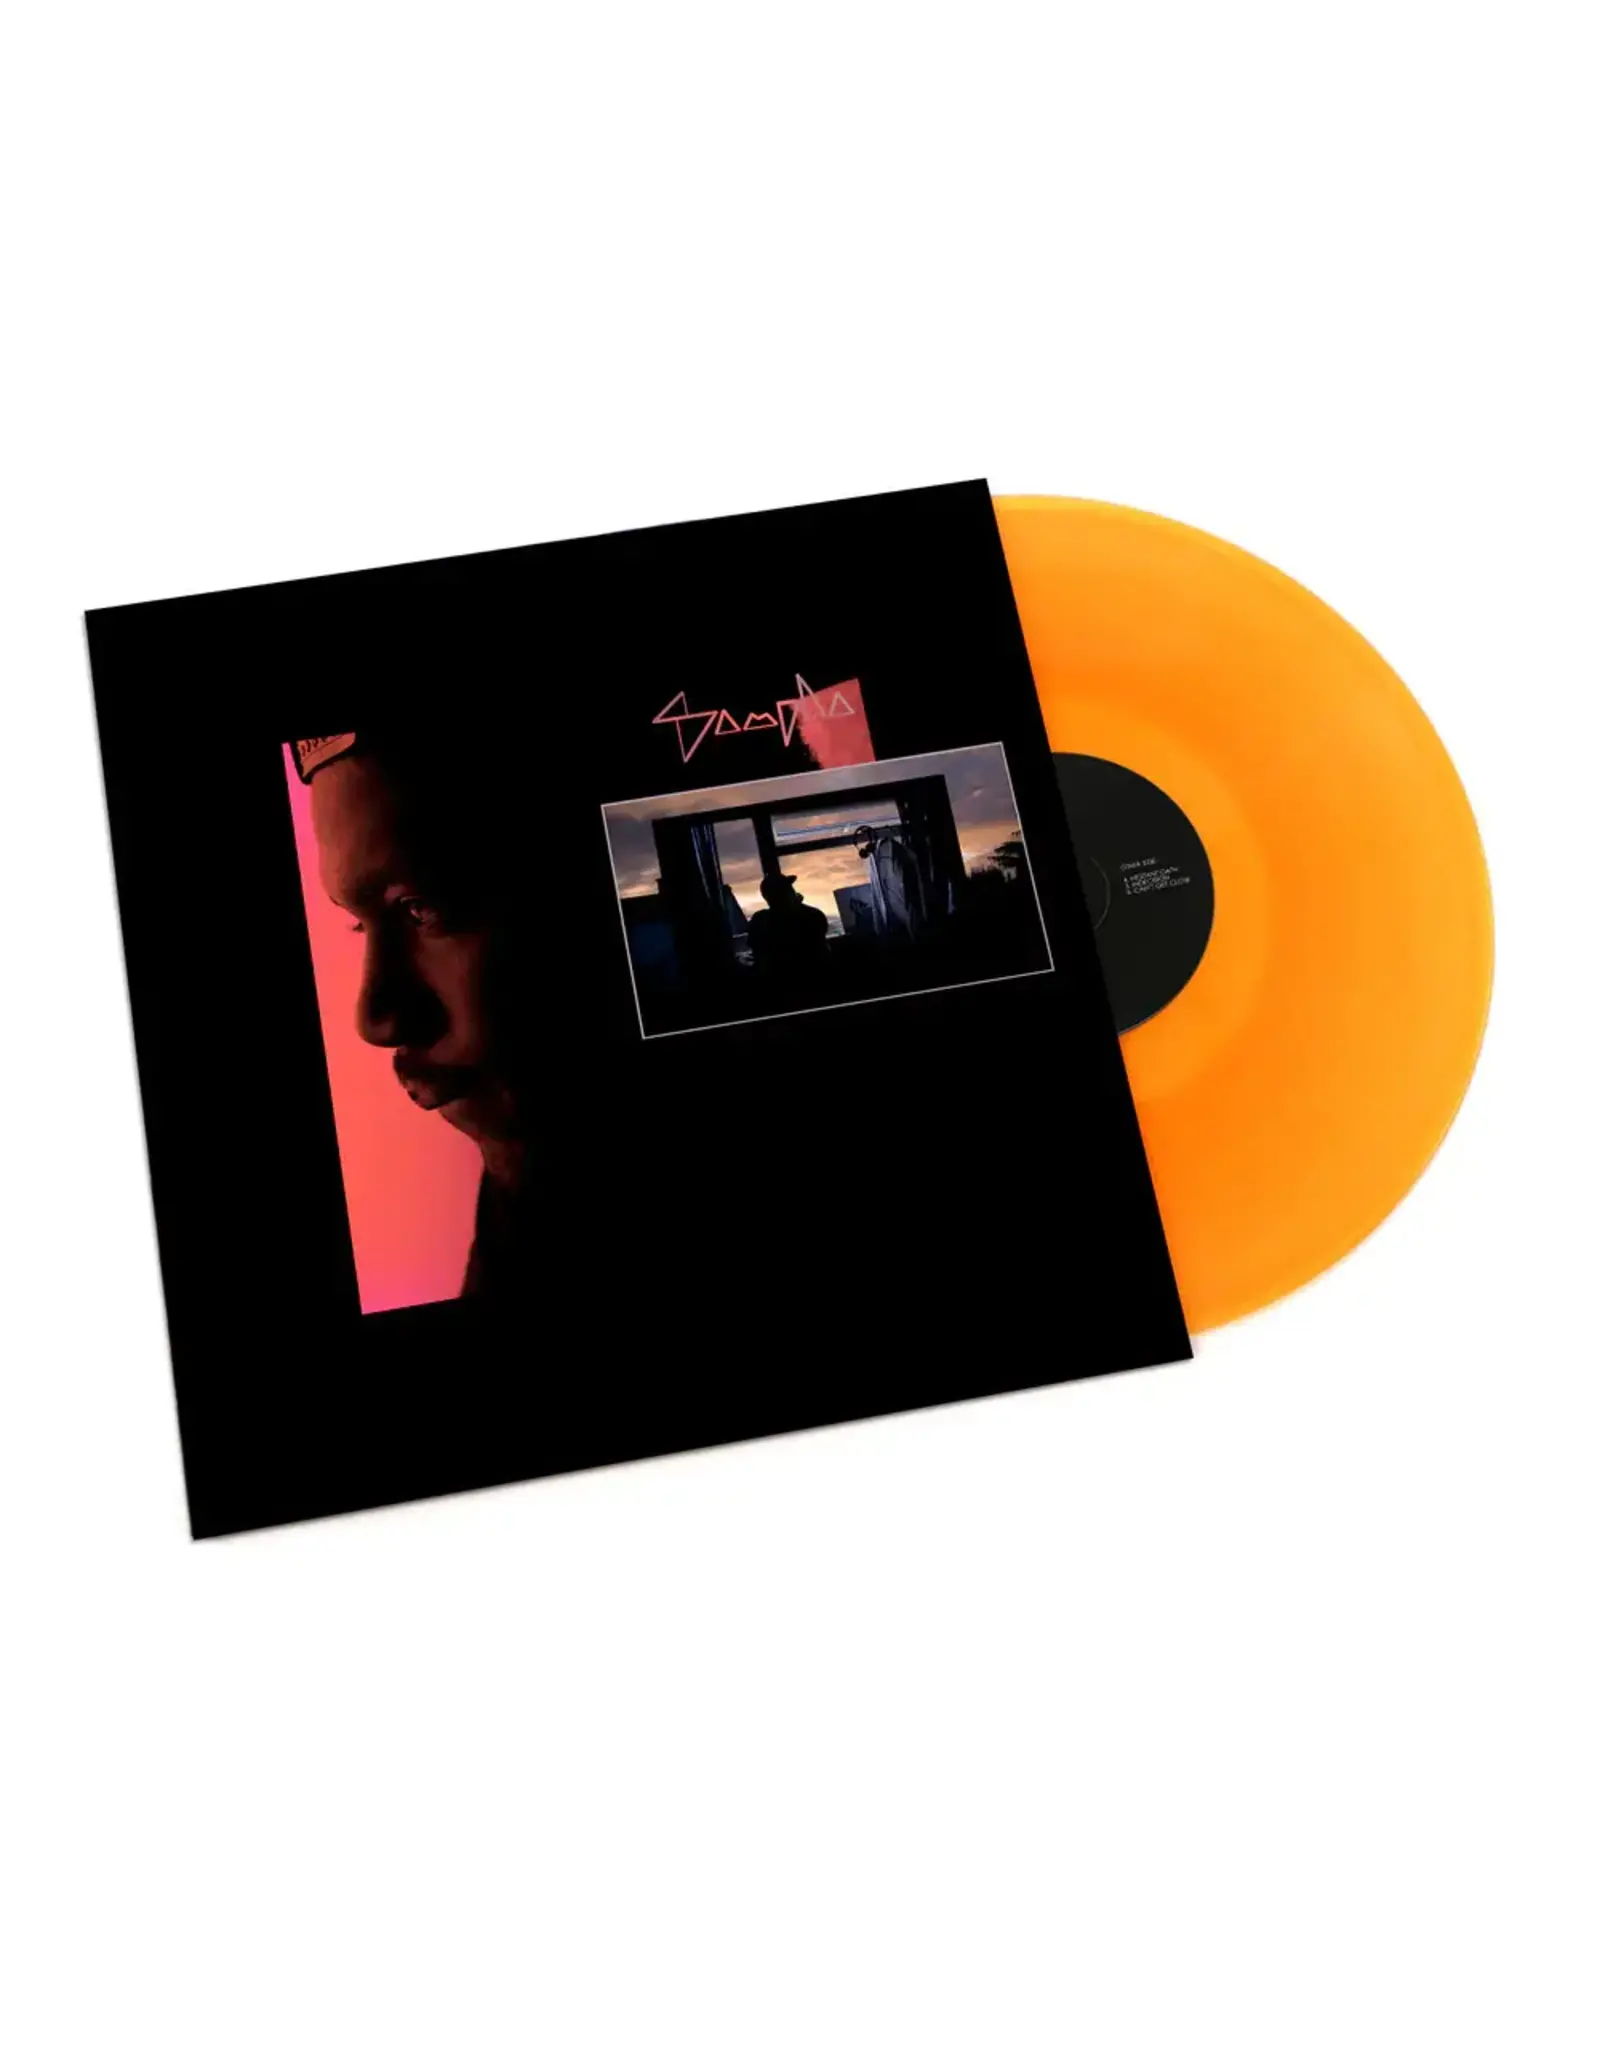 Sampha - Dual EP (10th Anniversary) [Exclusive Orange Vinyl]Sampha - Dual EP (Exclusive Transparent Orange Vinyl)